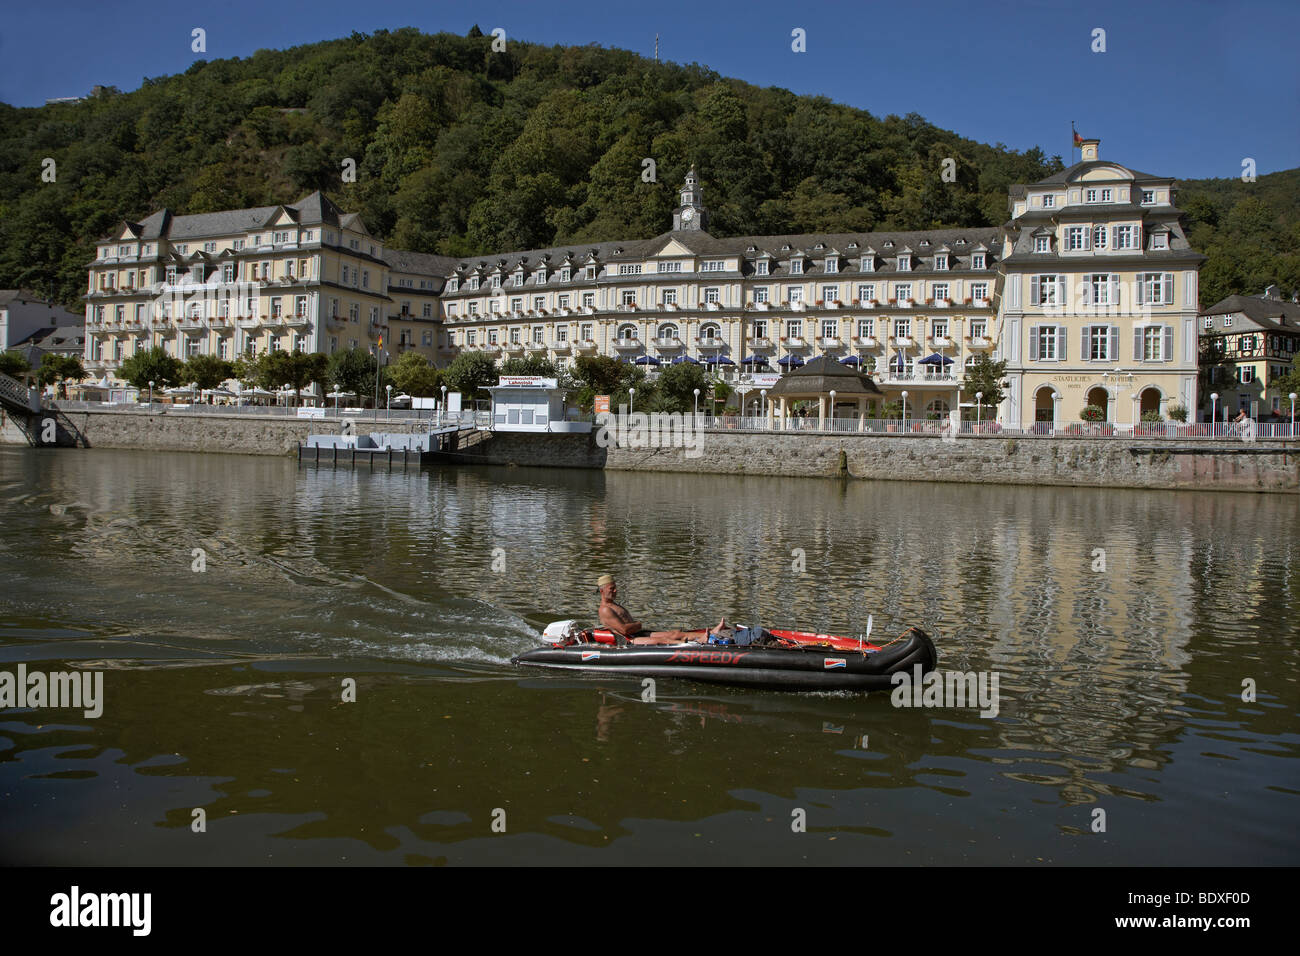 The spa quarter of Bad Ems on the Lahn river, Bad Ems, Rhineland-Palatinate, Germany, Europe Stock Photo